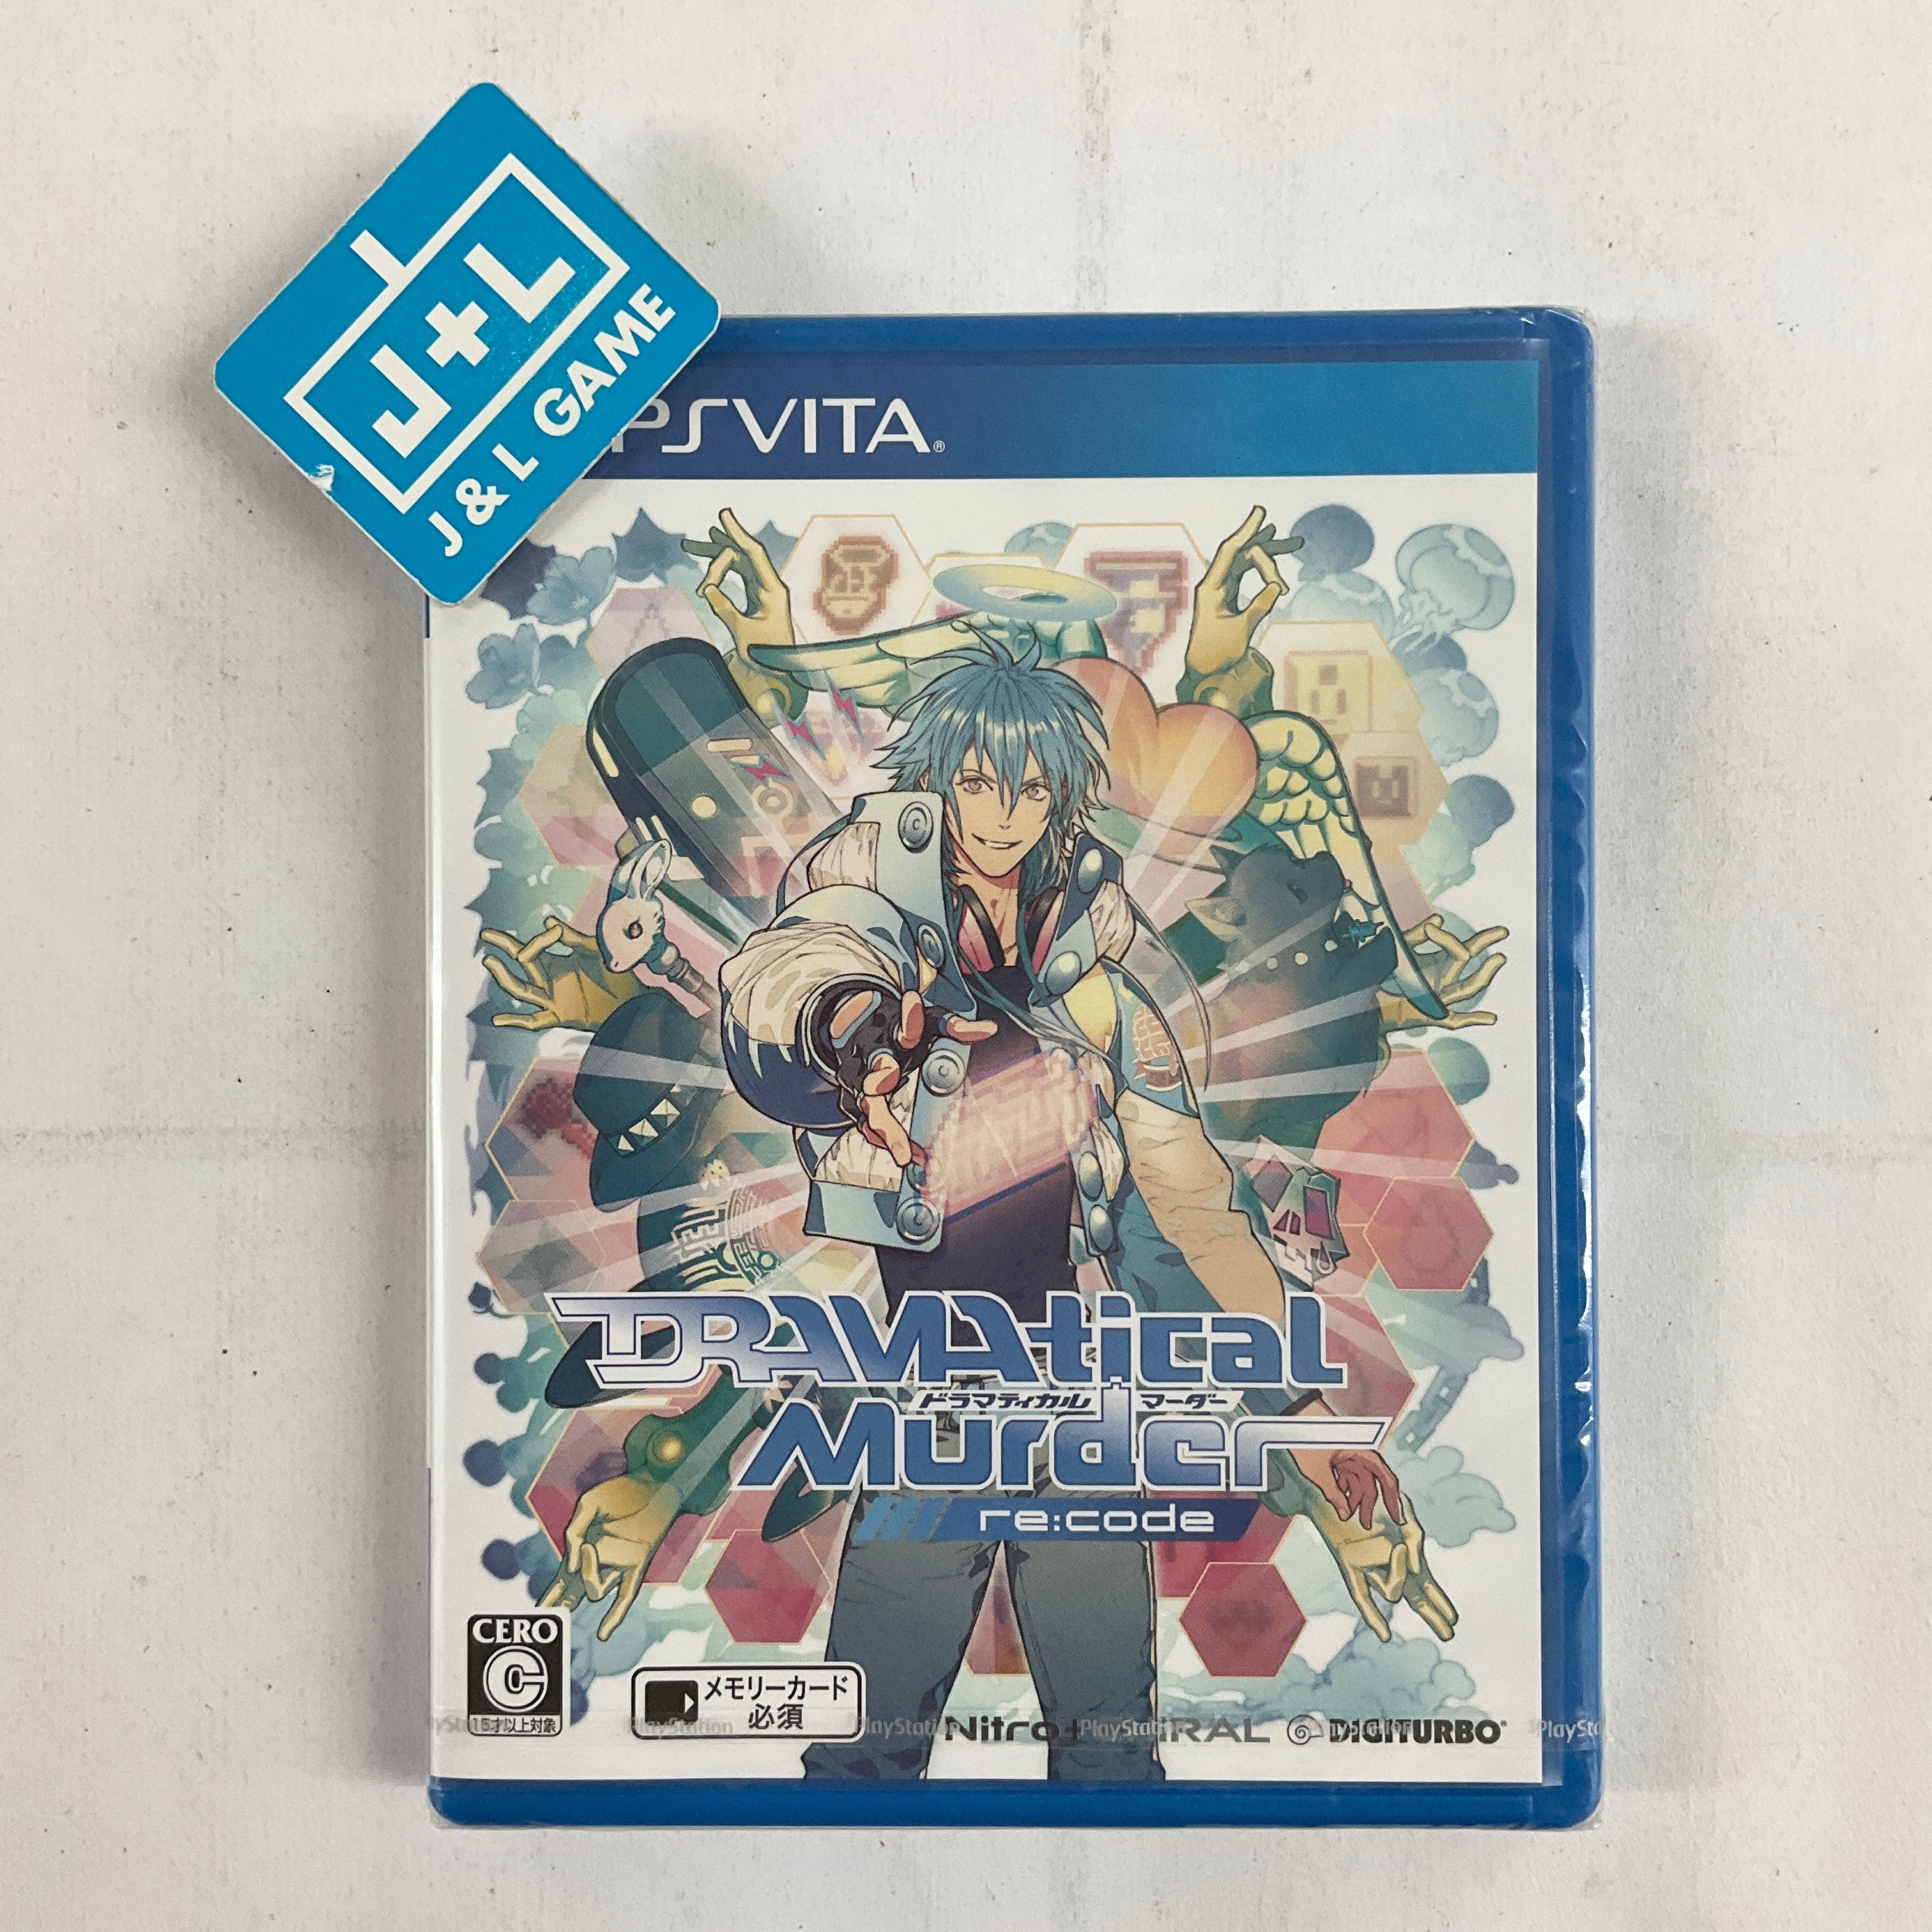 DRAMAtical Murder re:code - (PSV) PS Vita (Japanese Import)